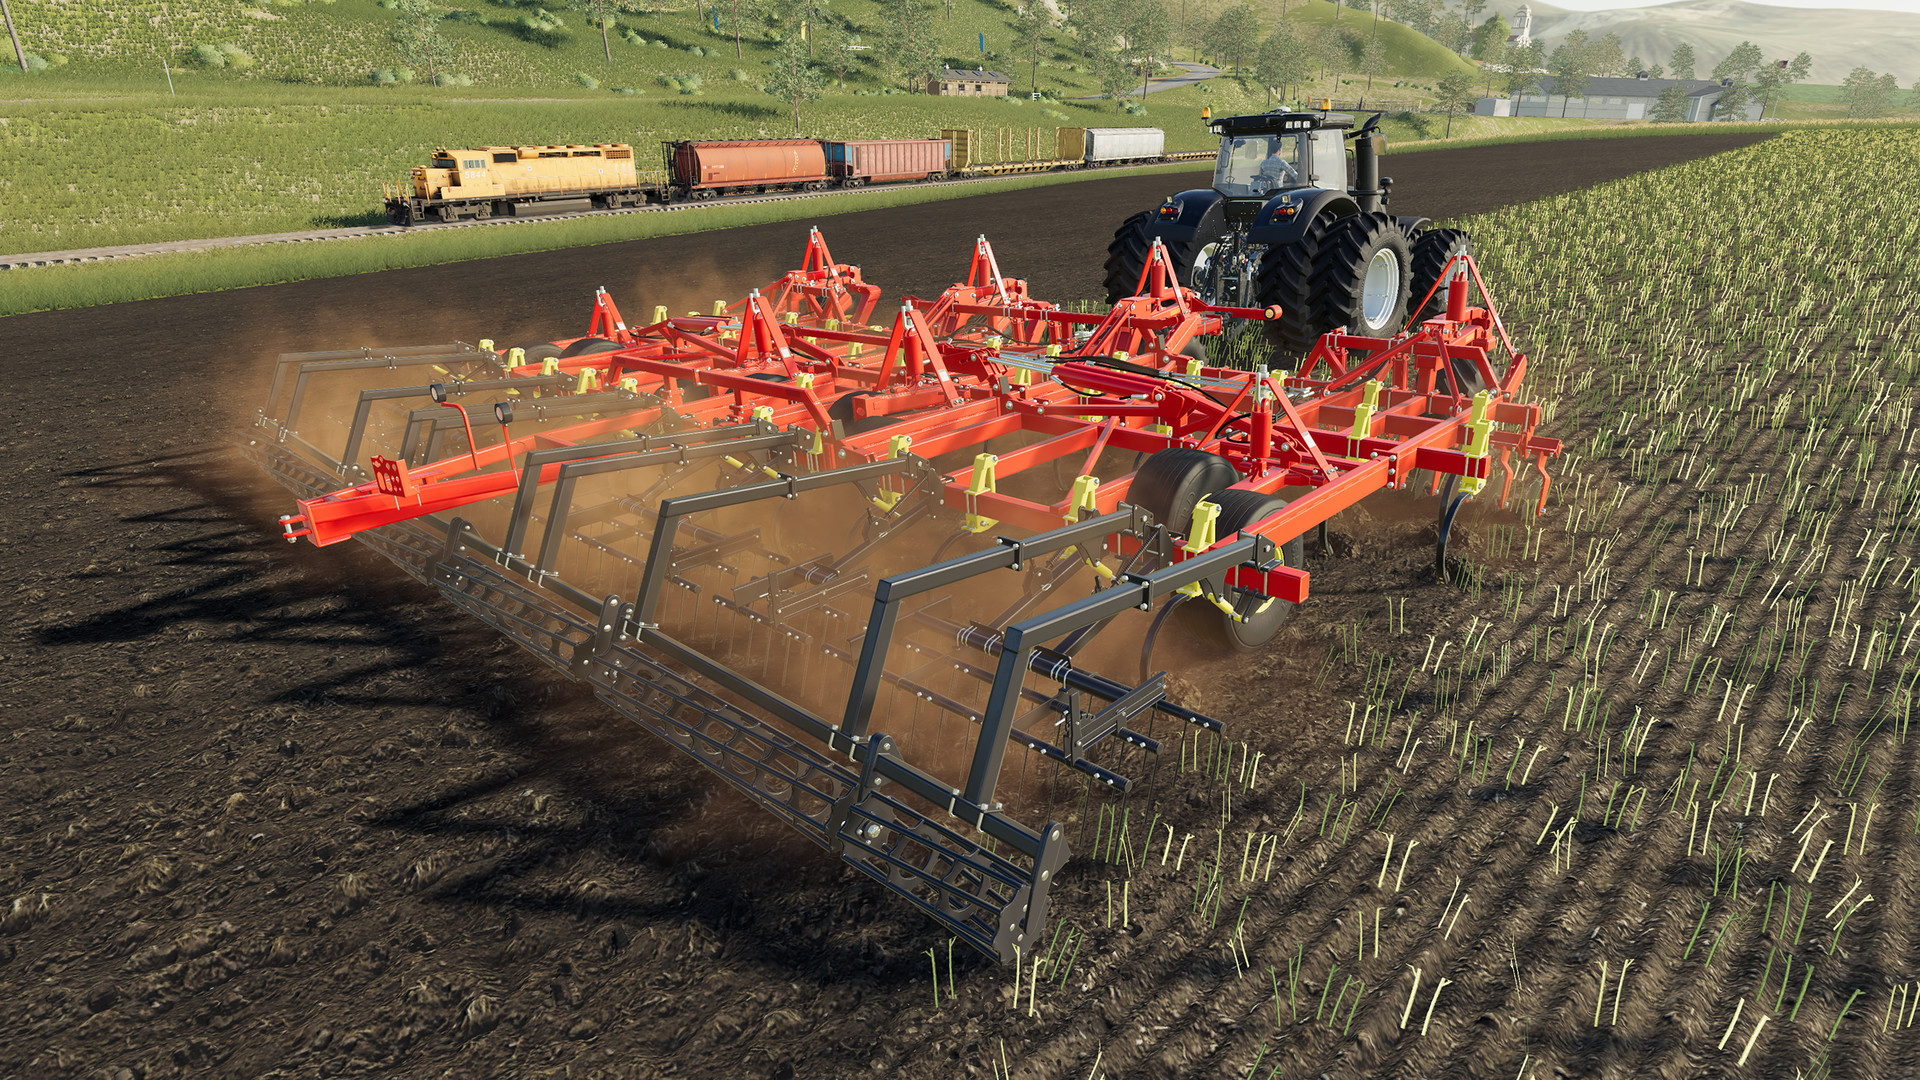 farming simulator 19 cross platform 2019